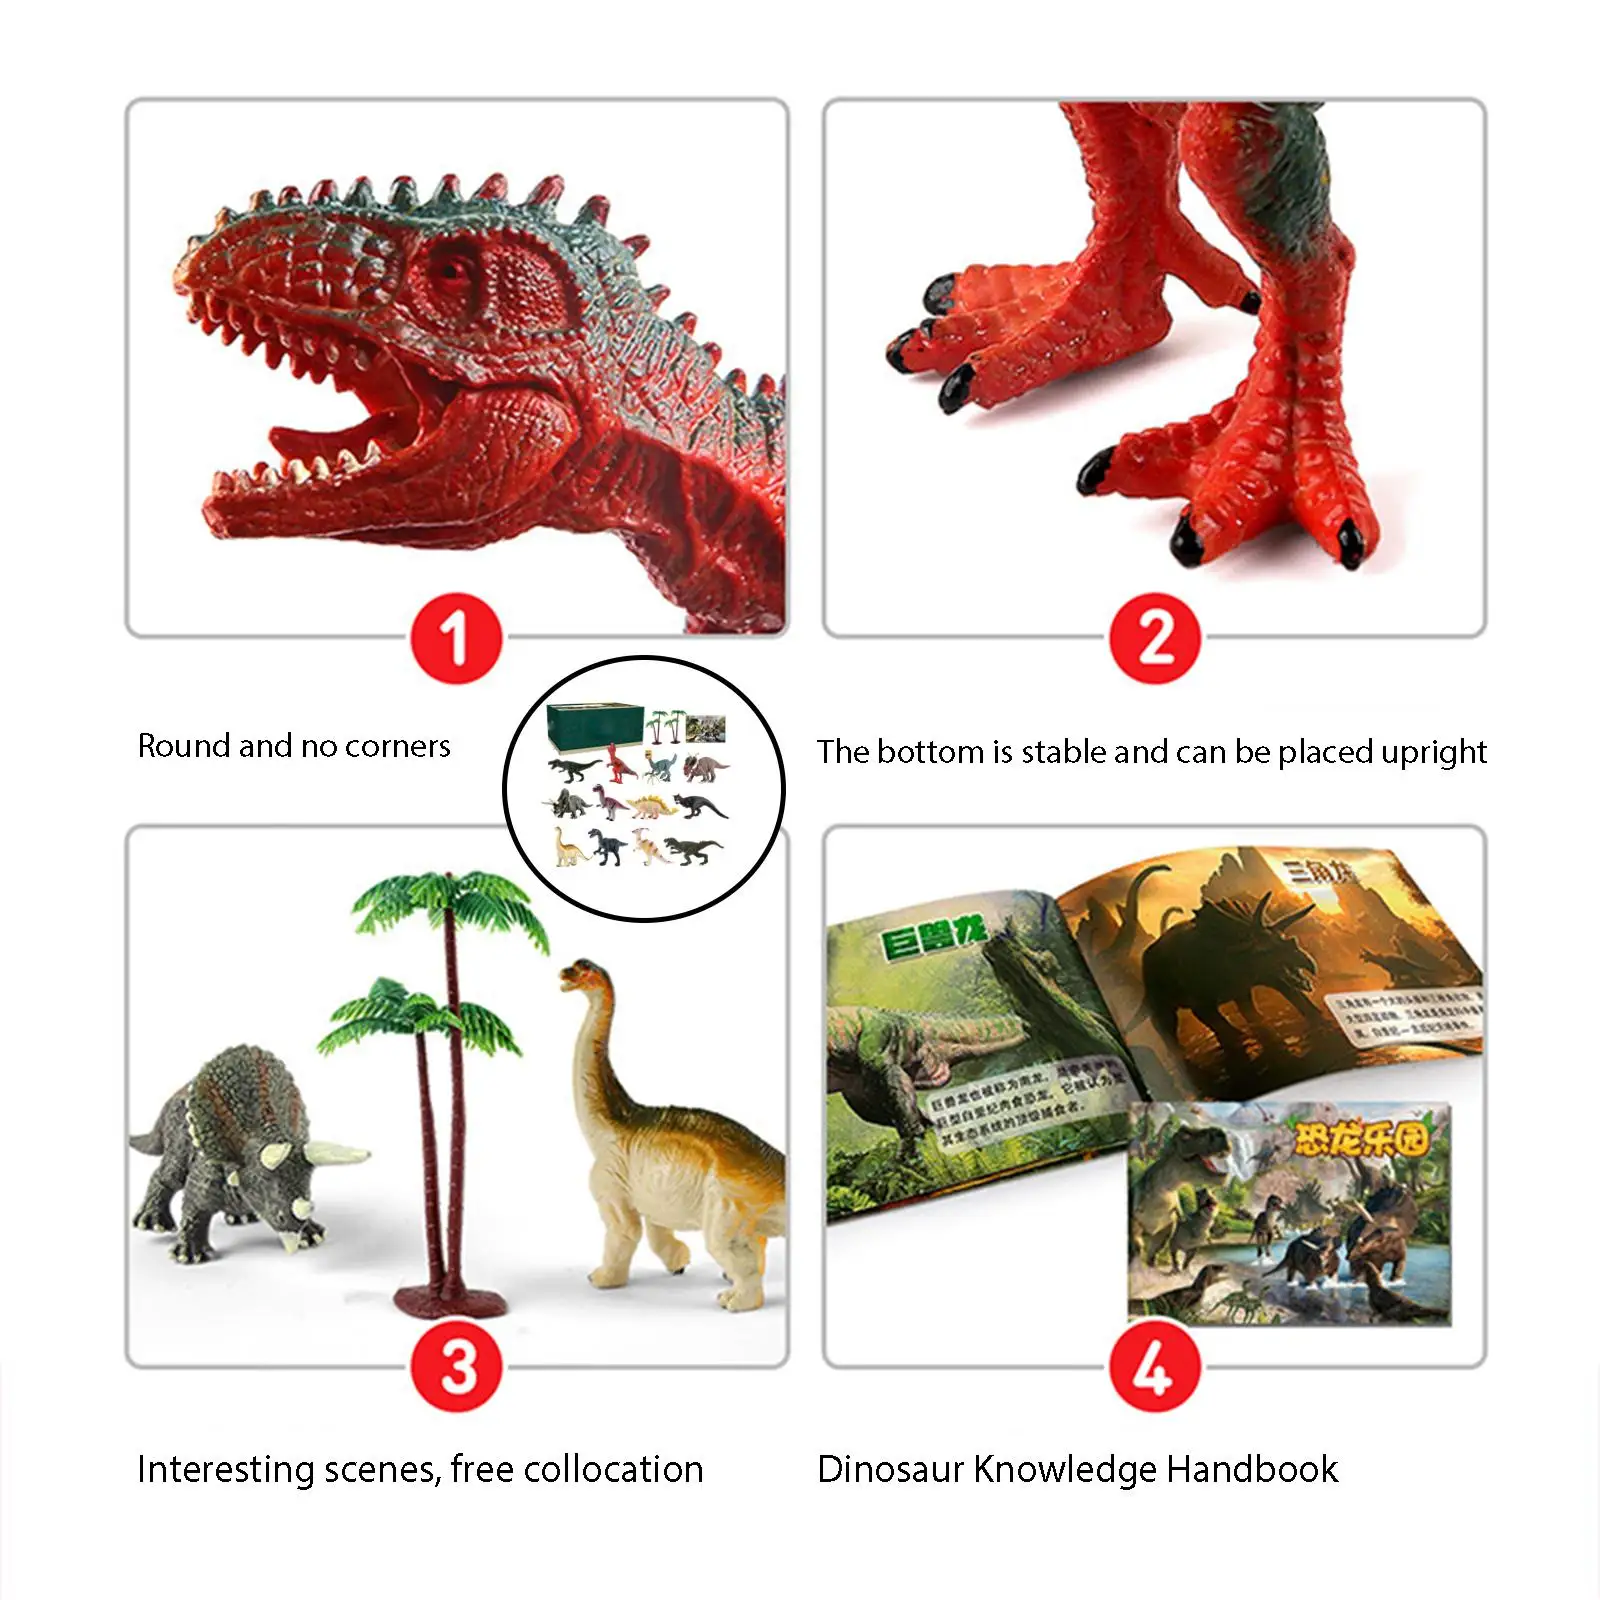 Simulated Dinosaur Toys Diversiform Dinosaur 14Pcs Dinosaur World for Lovers